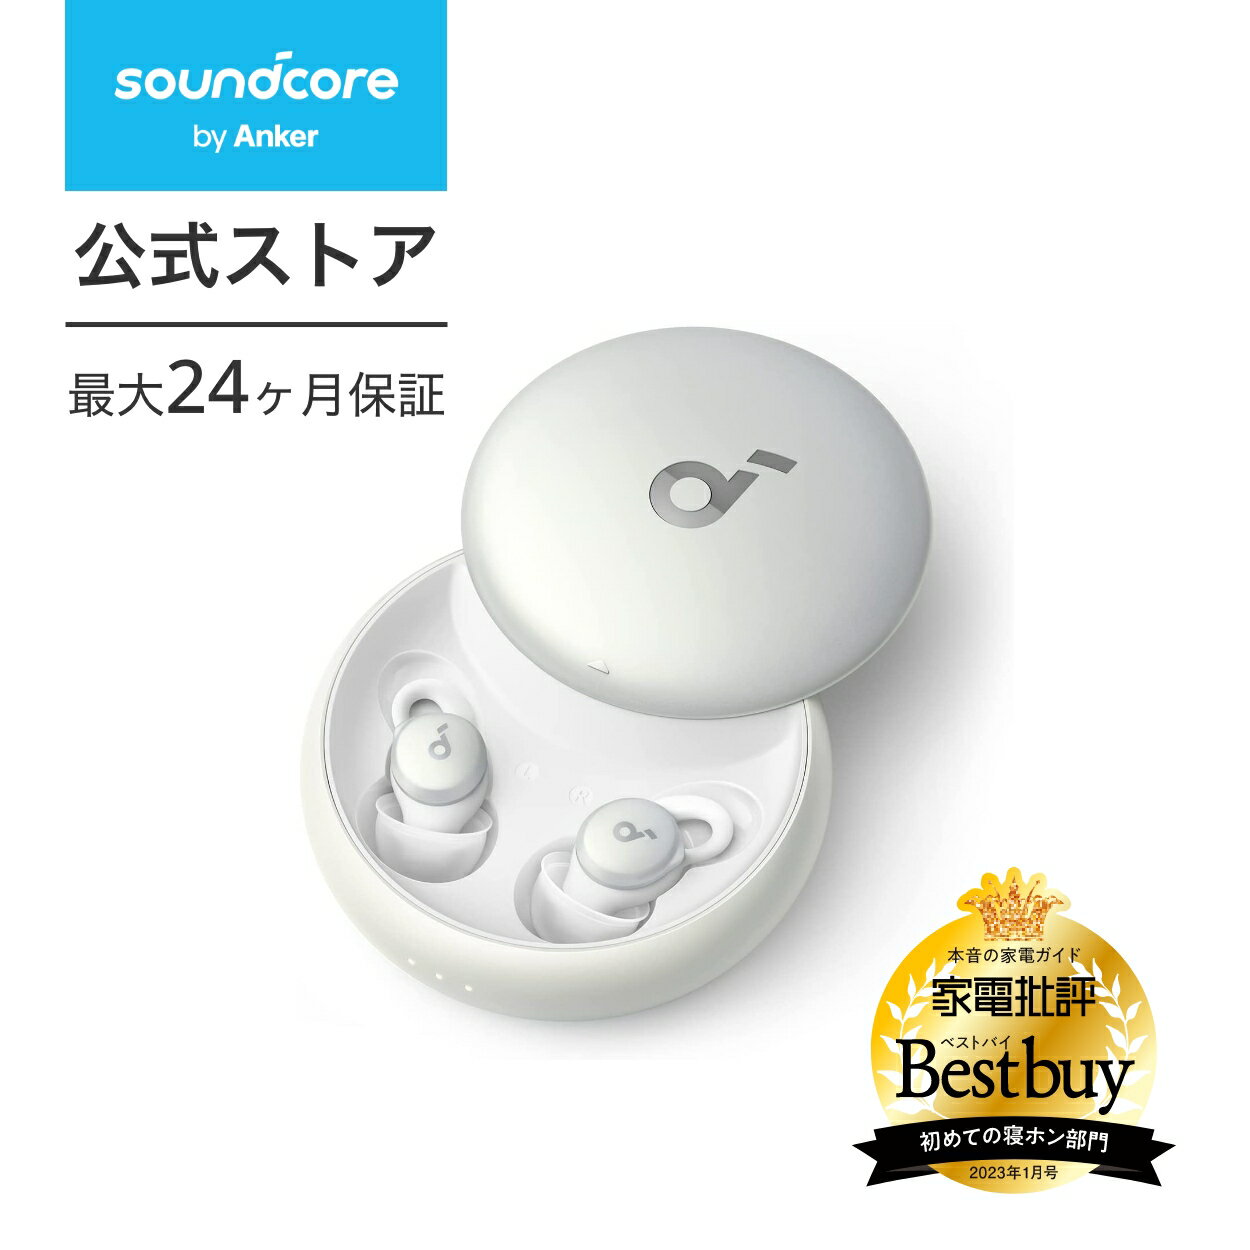 【25%OFF 2/23まで】【あす楽対応】Anker Soundcore Sleep A10 （ワイヤレスイヤホン Bluetooth 5.2）【完全ワイヤレスイヤホン / IPX4防水規格 / 最大47時間音楽再生 / 専用アプリ対応 / 睡眠時間のモニタリング / コンパクト / 軽量設計 / PSE技術基準適合】